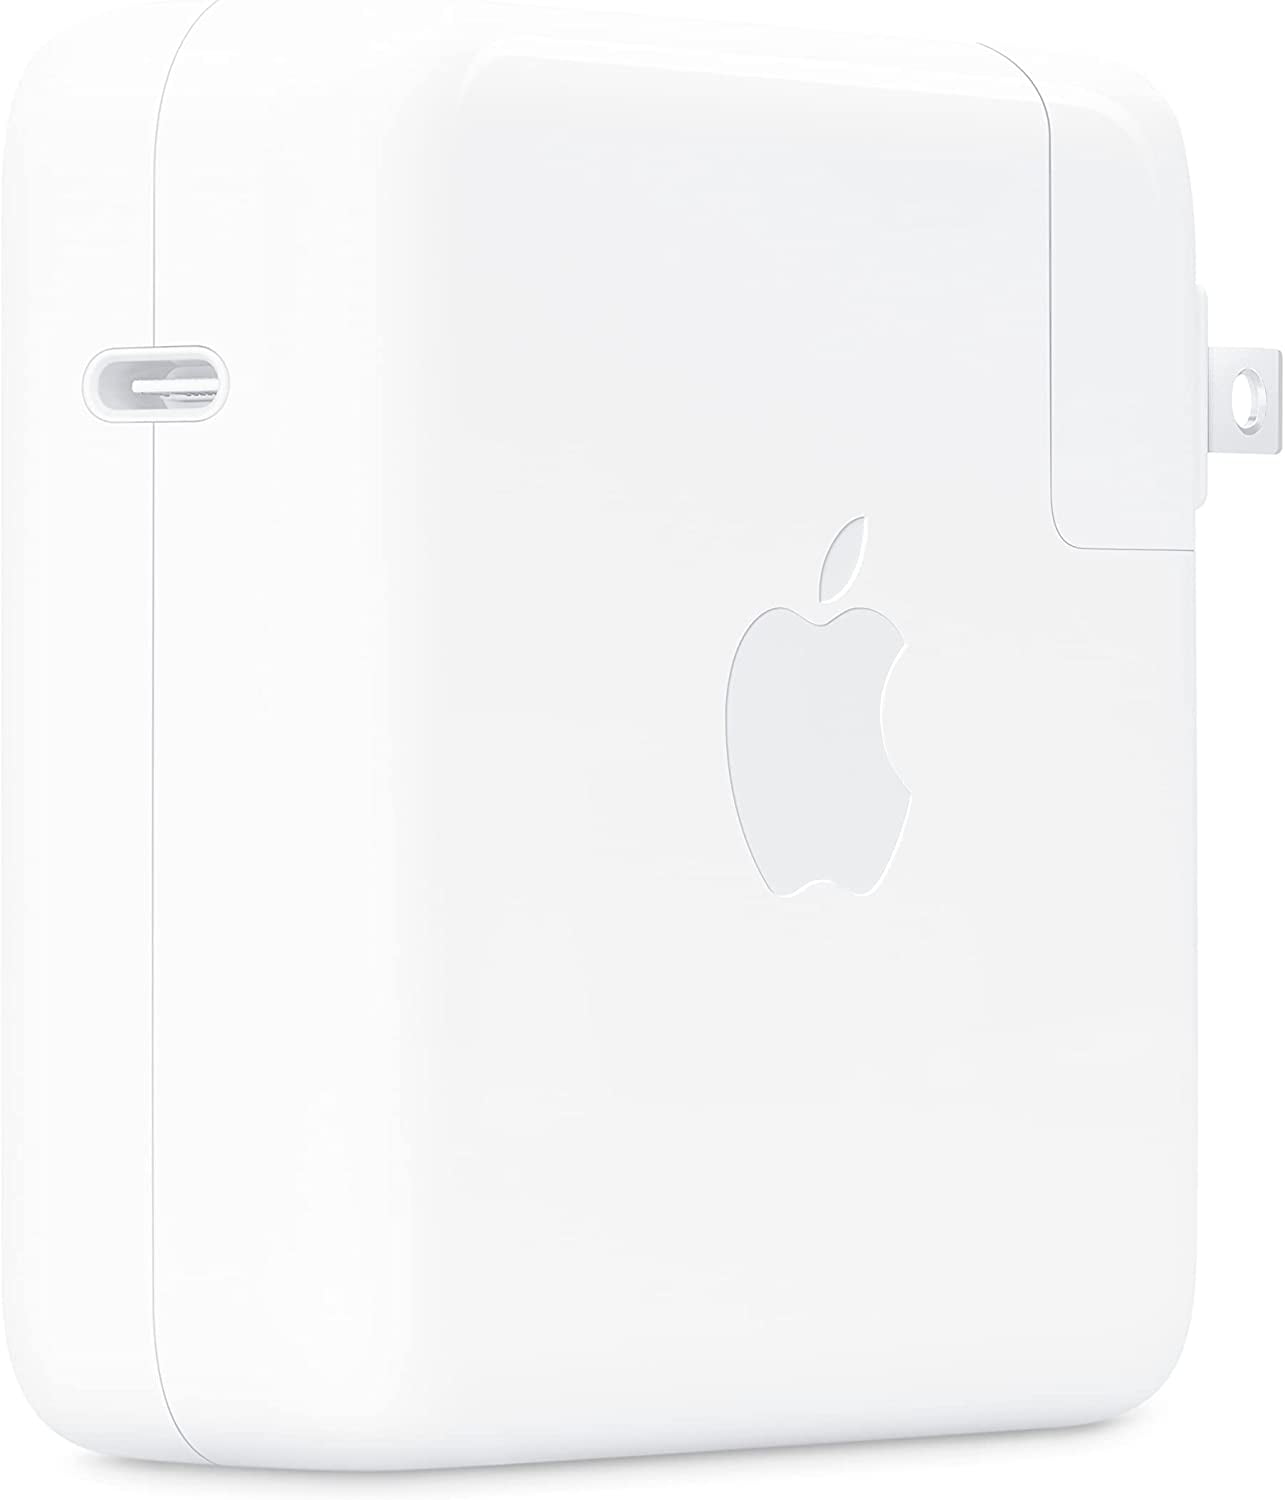 Apple Airpod Pro Custom Adapters, Best Adapters